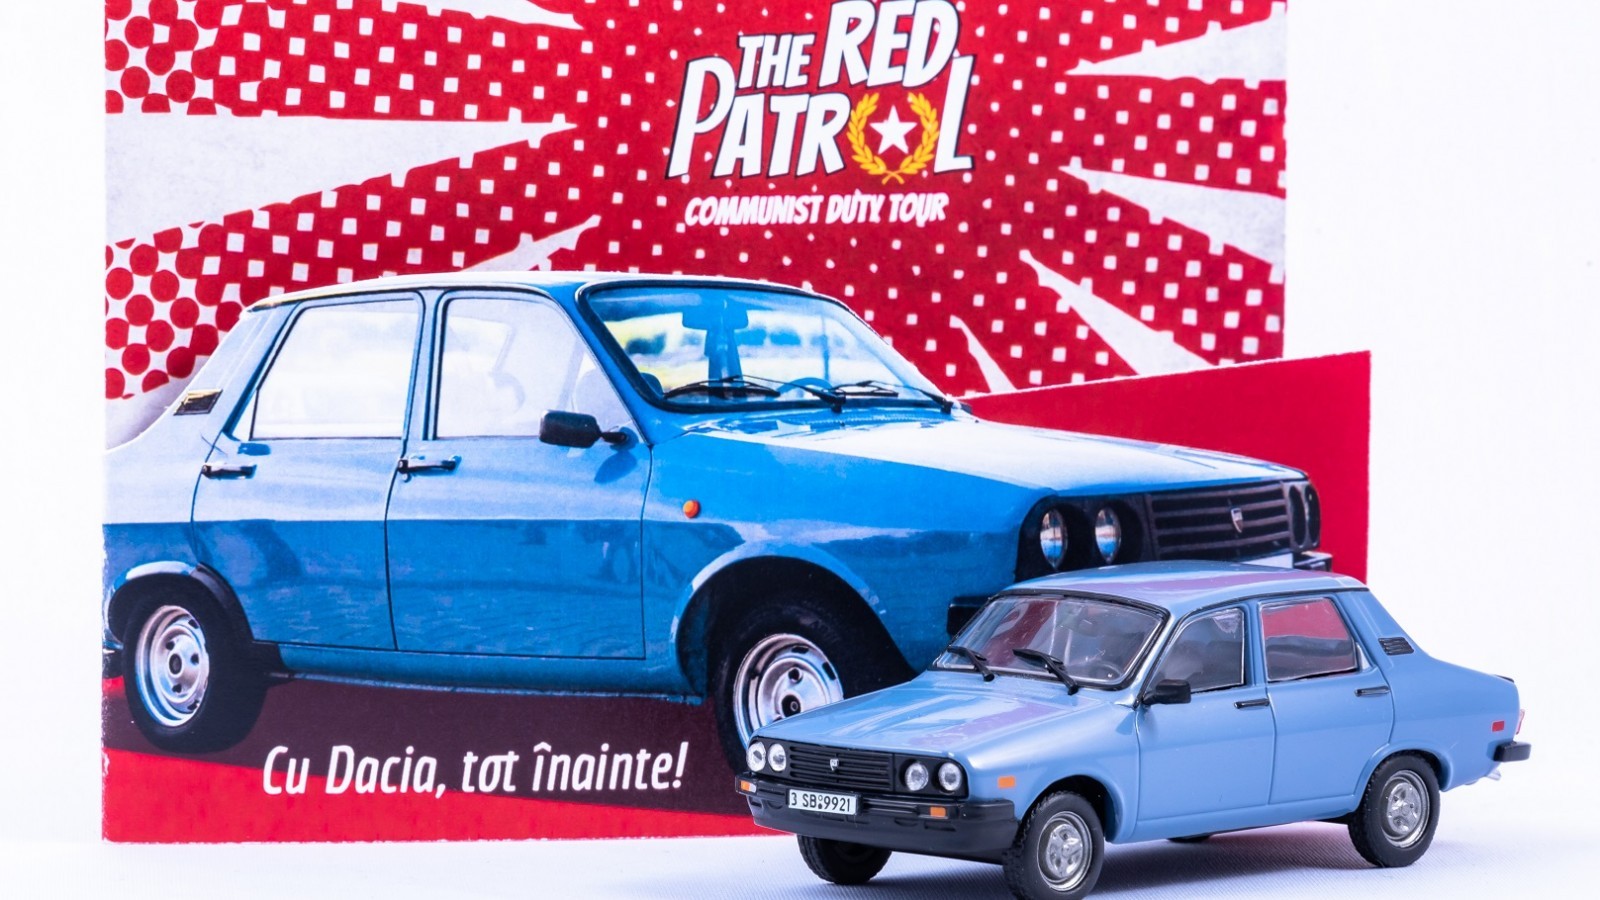 RedPatrol - Cu Dacia tot inainte!